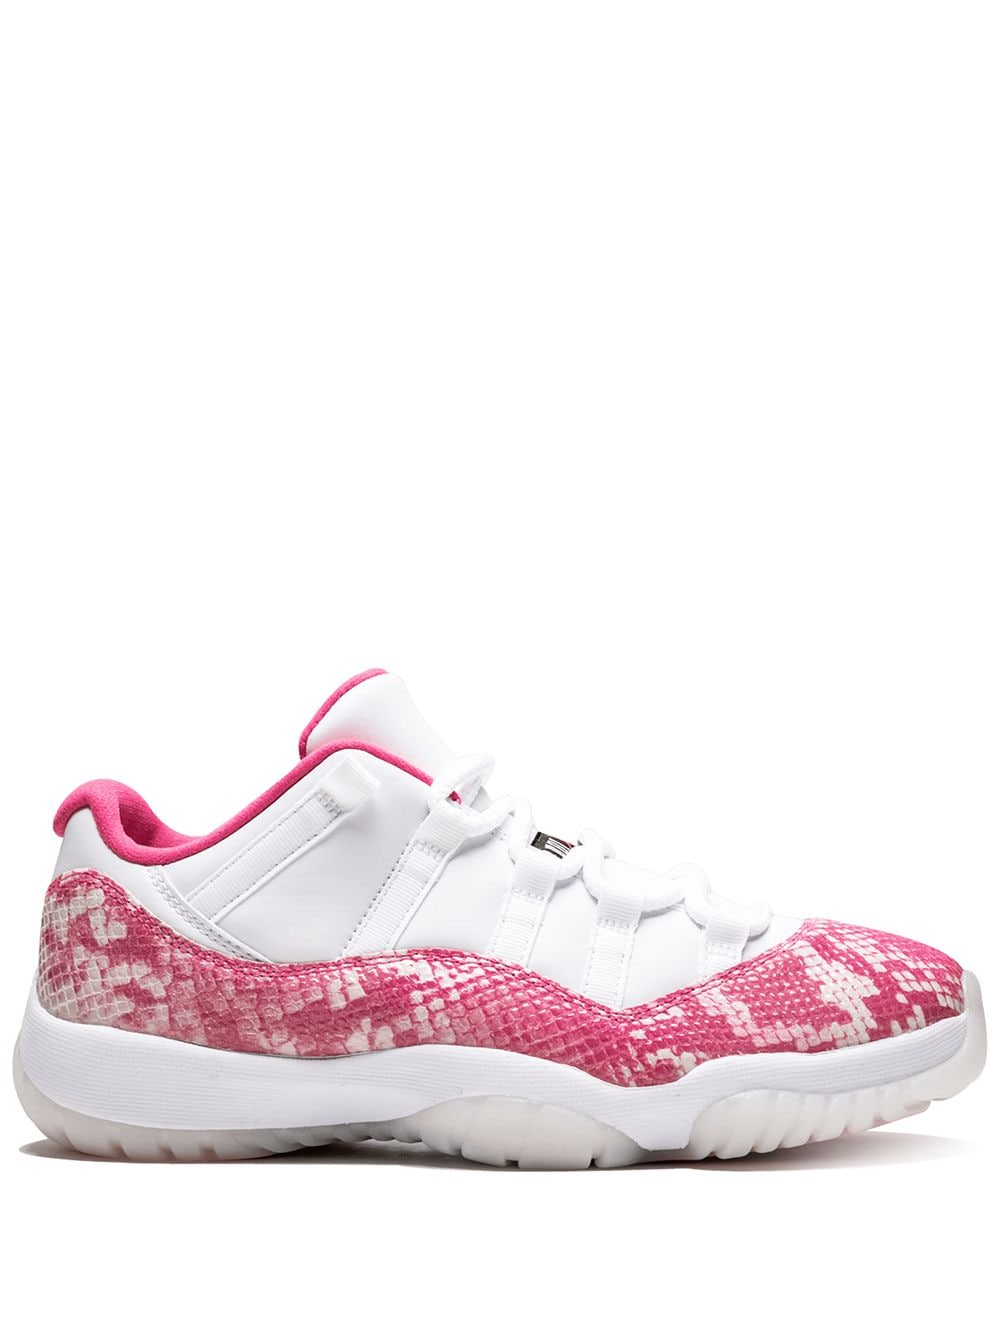 Jordan Air Jordan 11 Retro Low "Pink Snakeskin" sneakers - White von Jordan